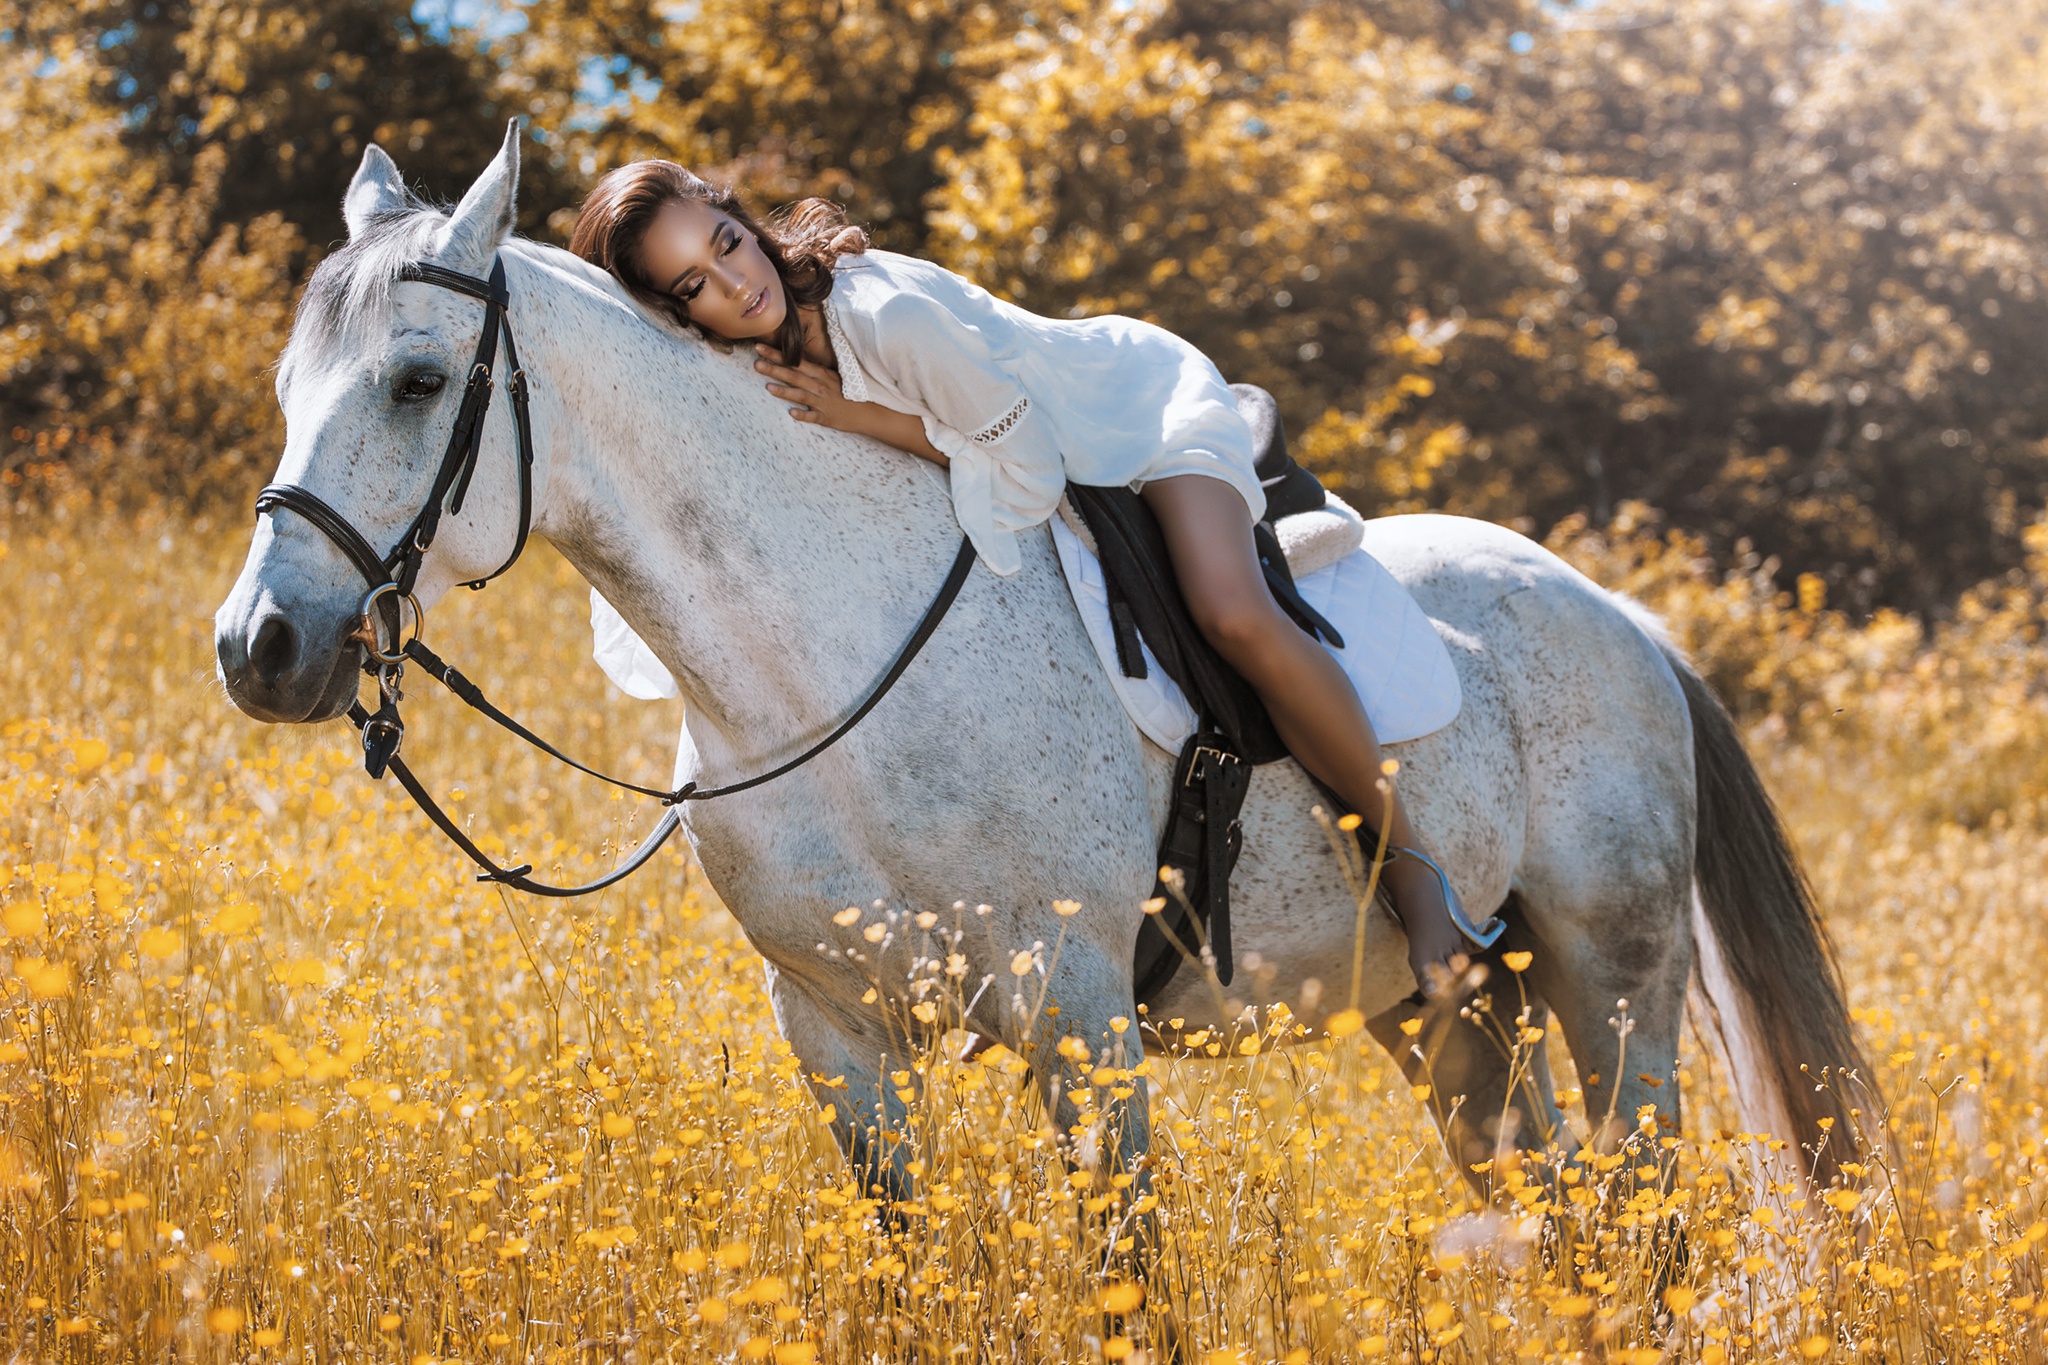 Лежа на коне. Верхом на лошади. Фотосессия с лошадьми. Девушка на коне. Красивая фотосессия с лошадью.